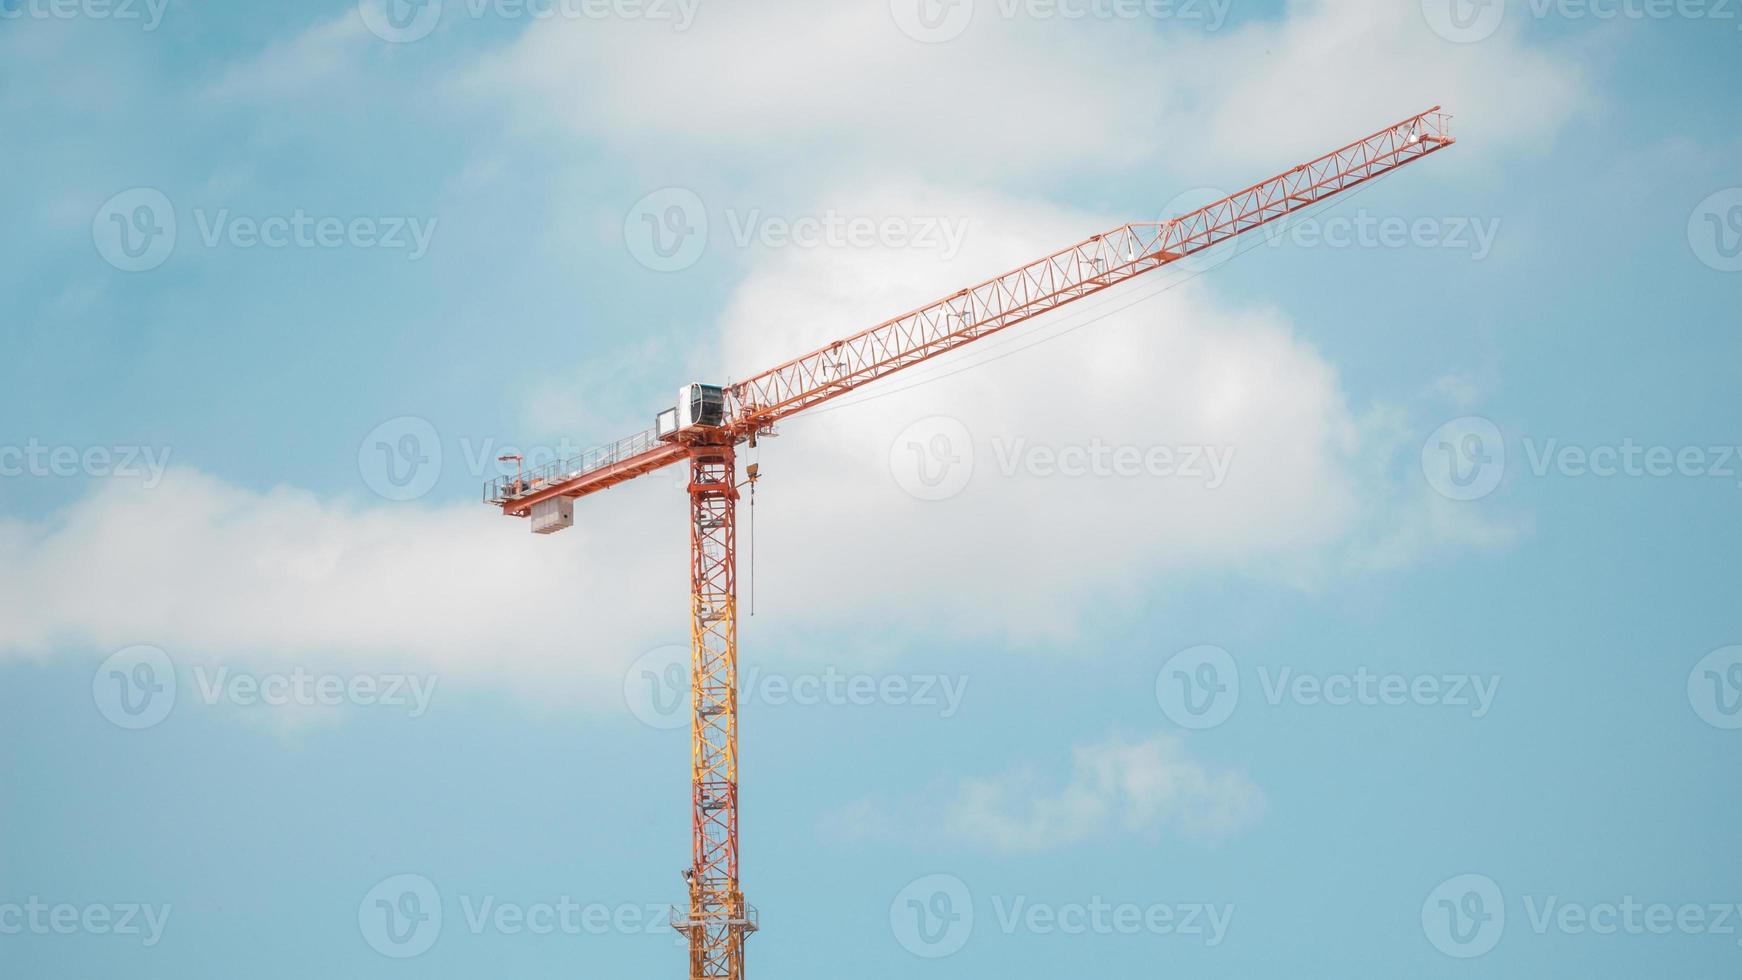 torenkraan in bouwwerf over blauwe hemel met wolken foto